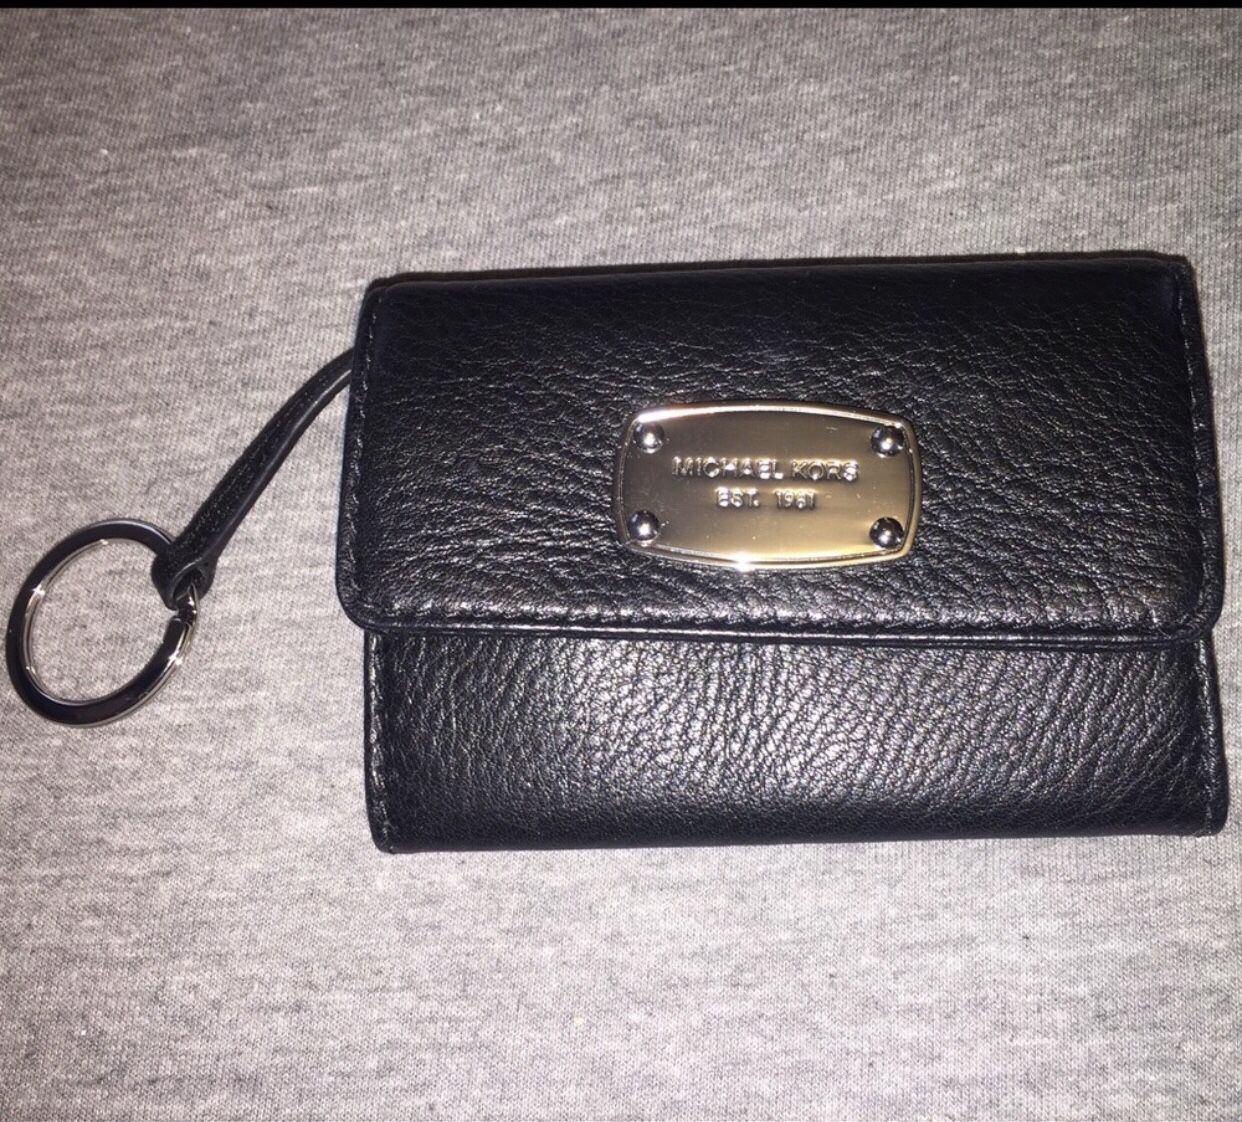 Michael Kors Wallet keychain/coin bag